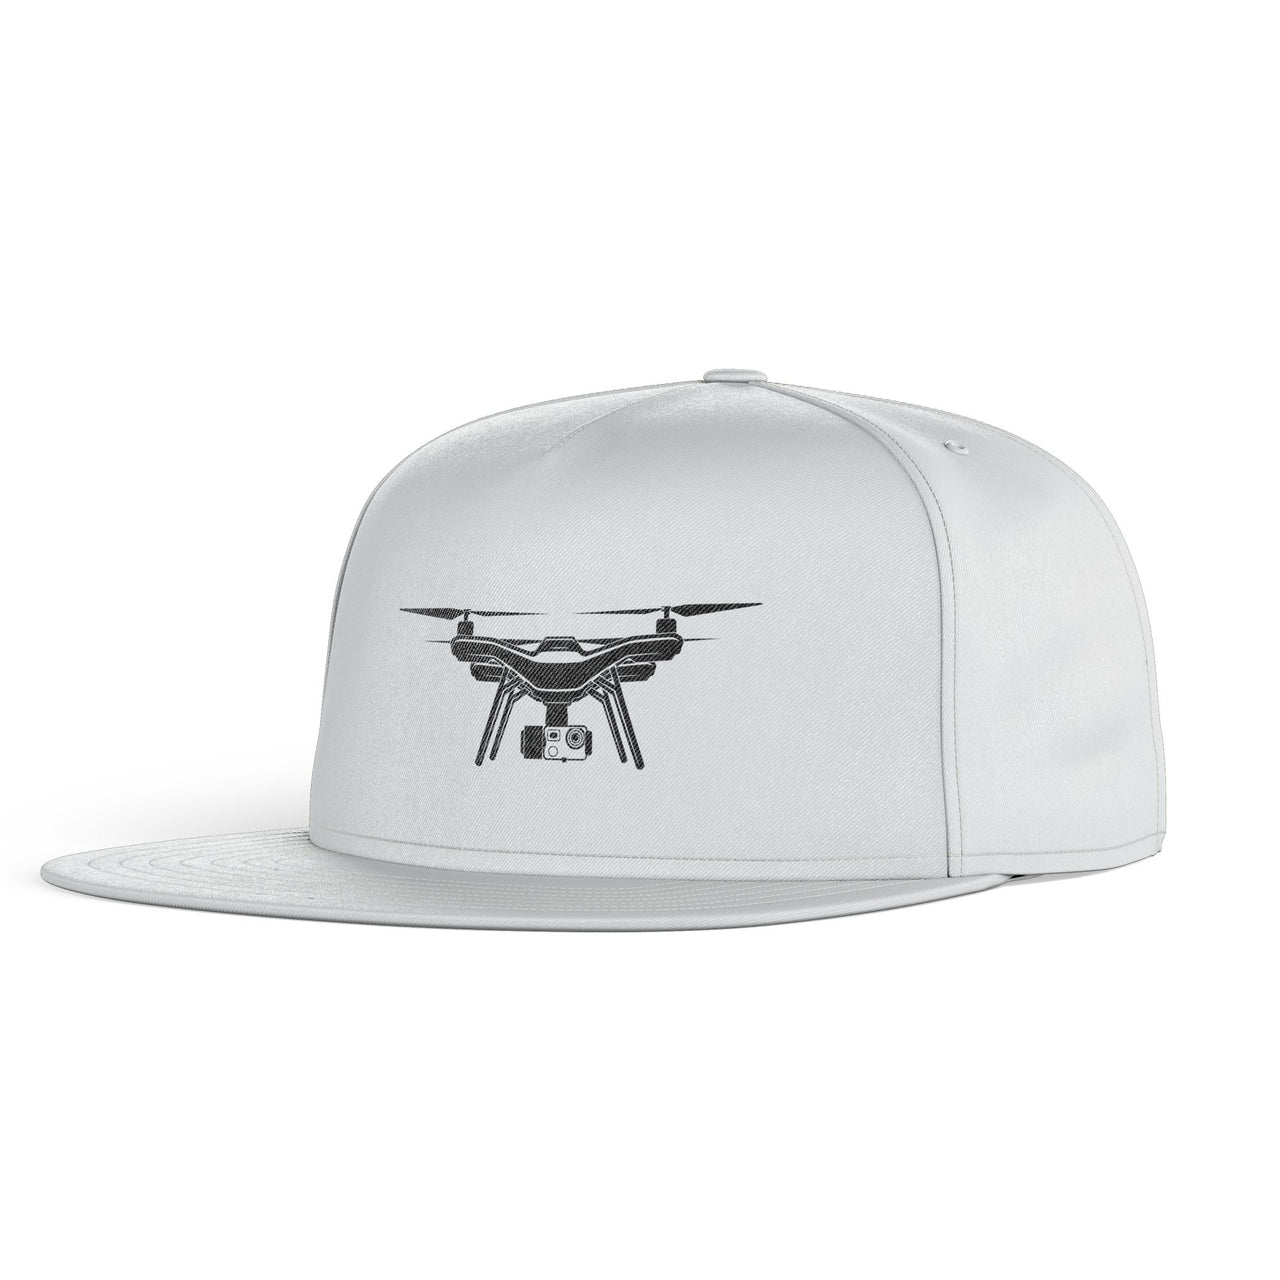 Drone Silhouette Designed Snapback Caps & Hats